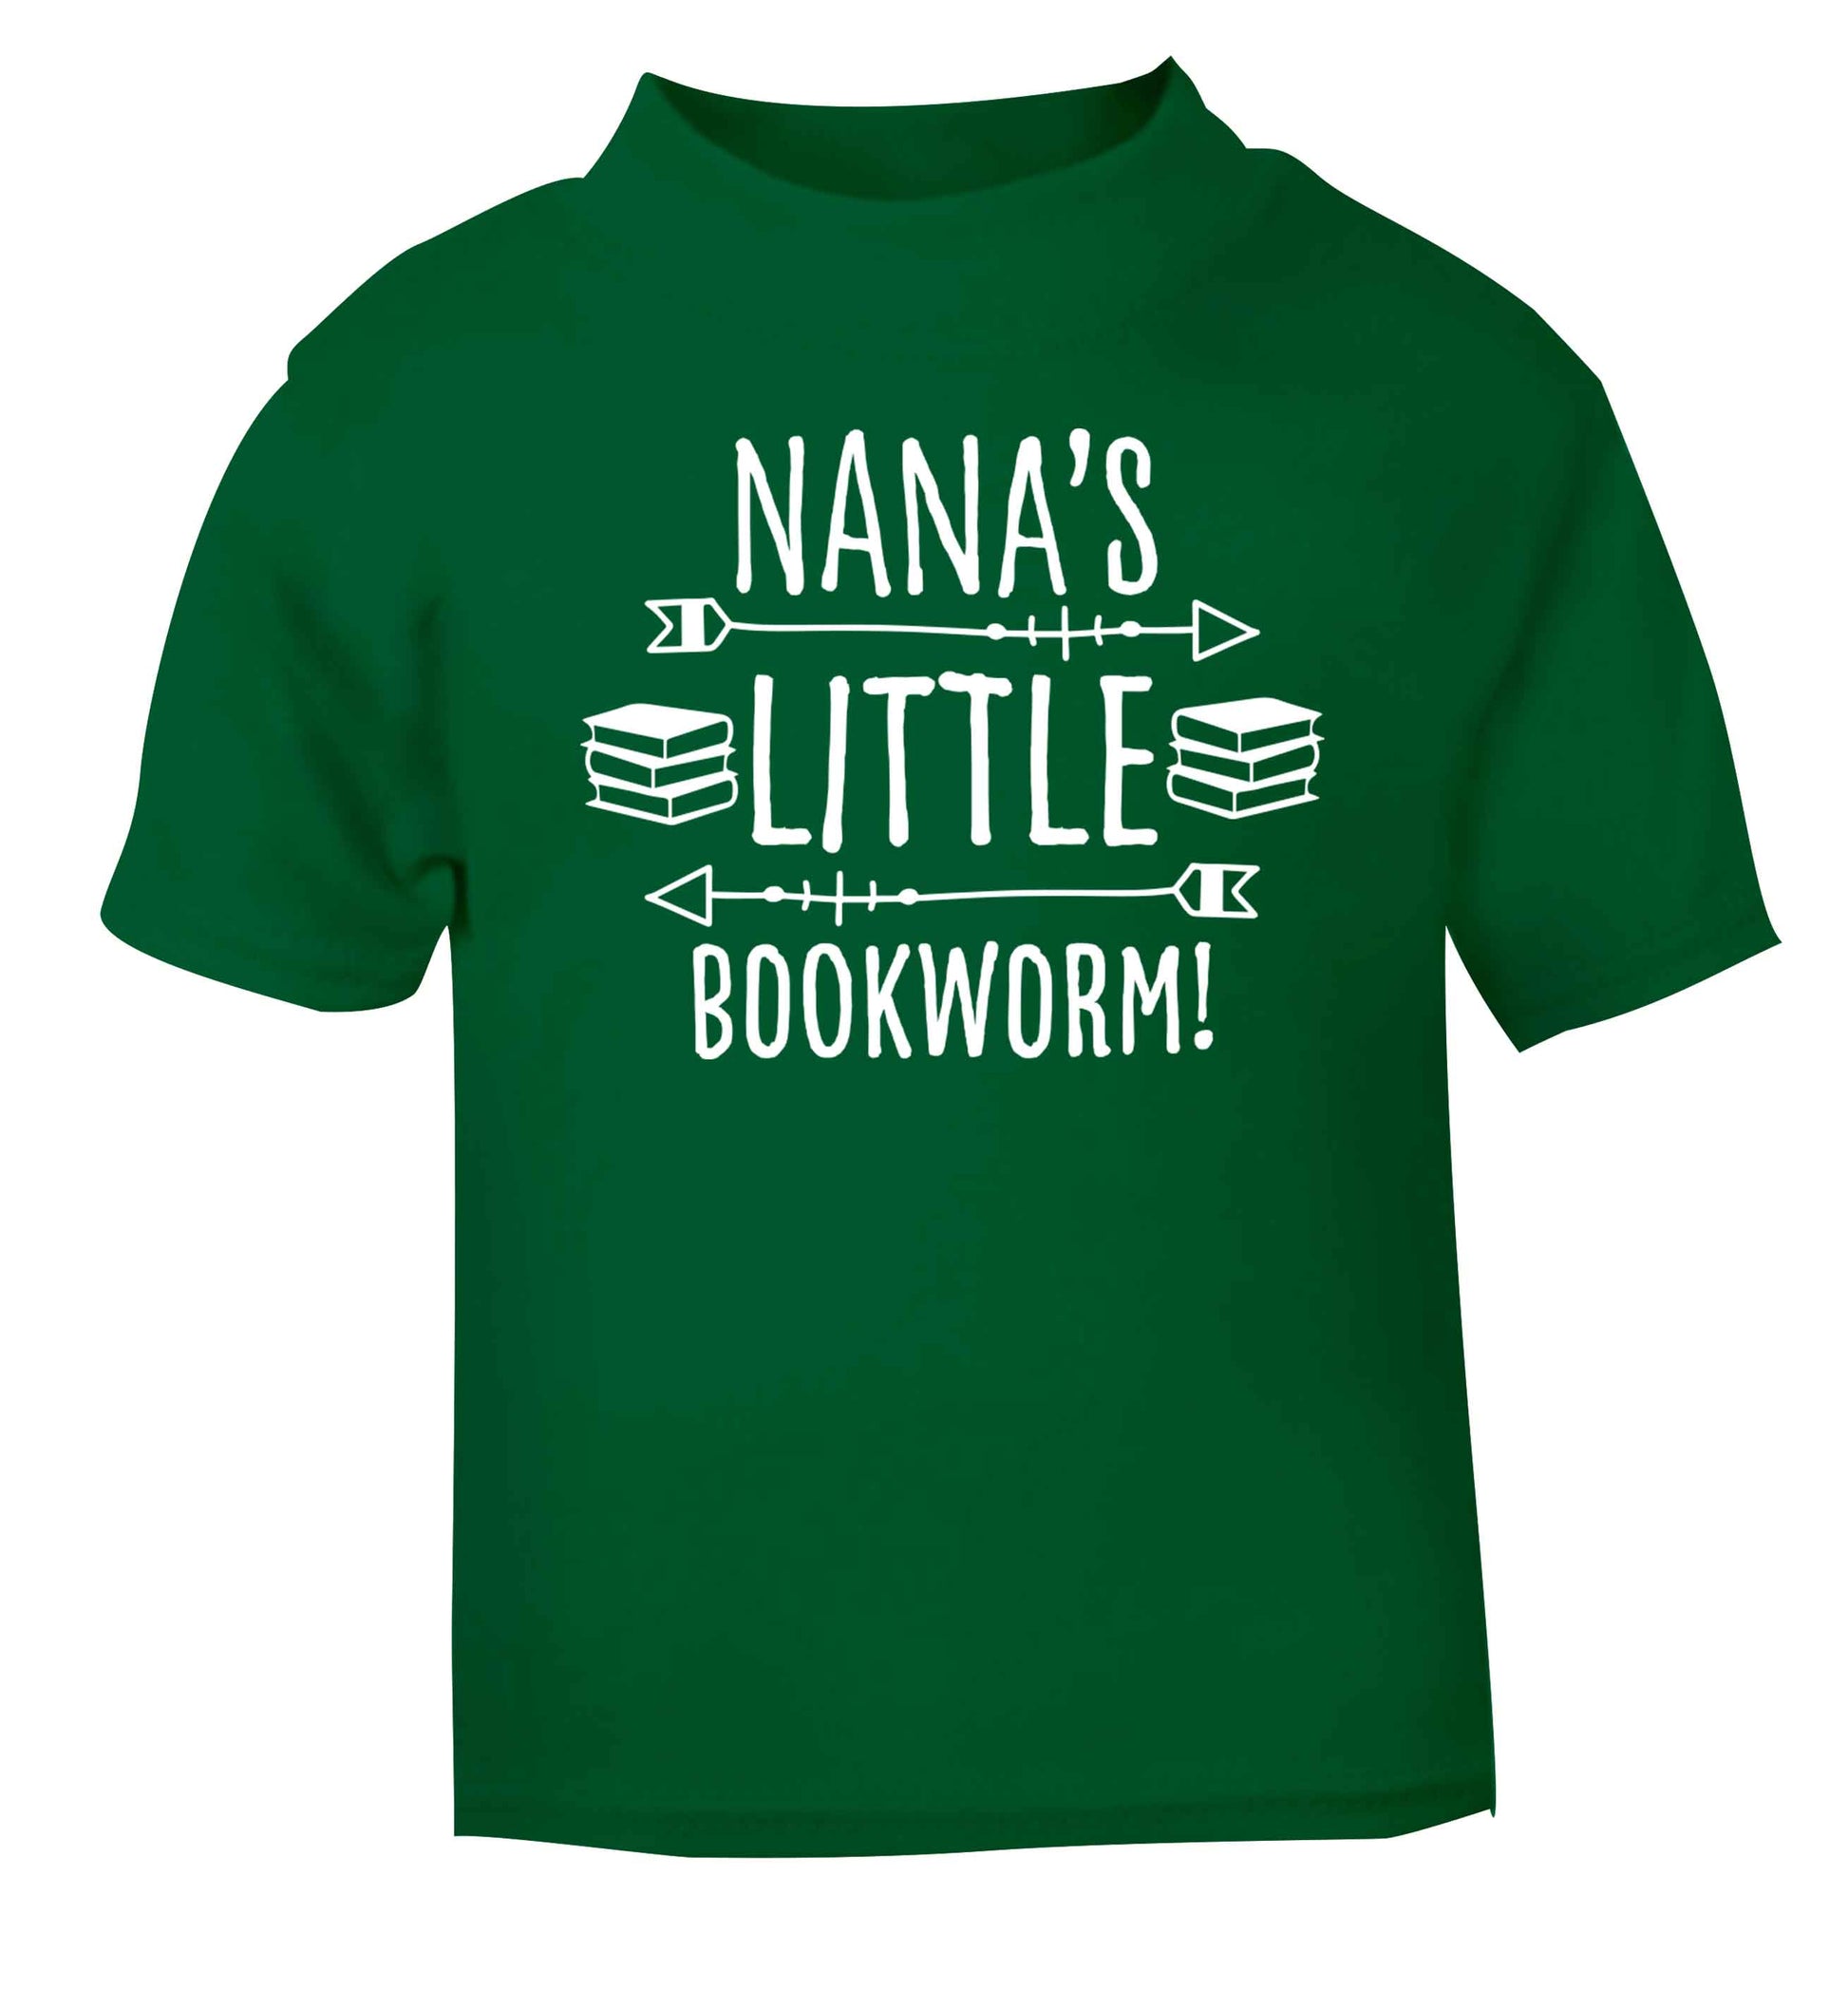 Grandad's little bookworm green baby toddler Tshirt 2 Years